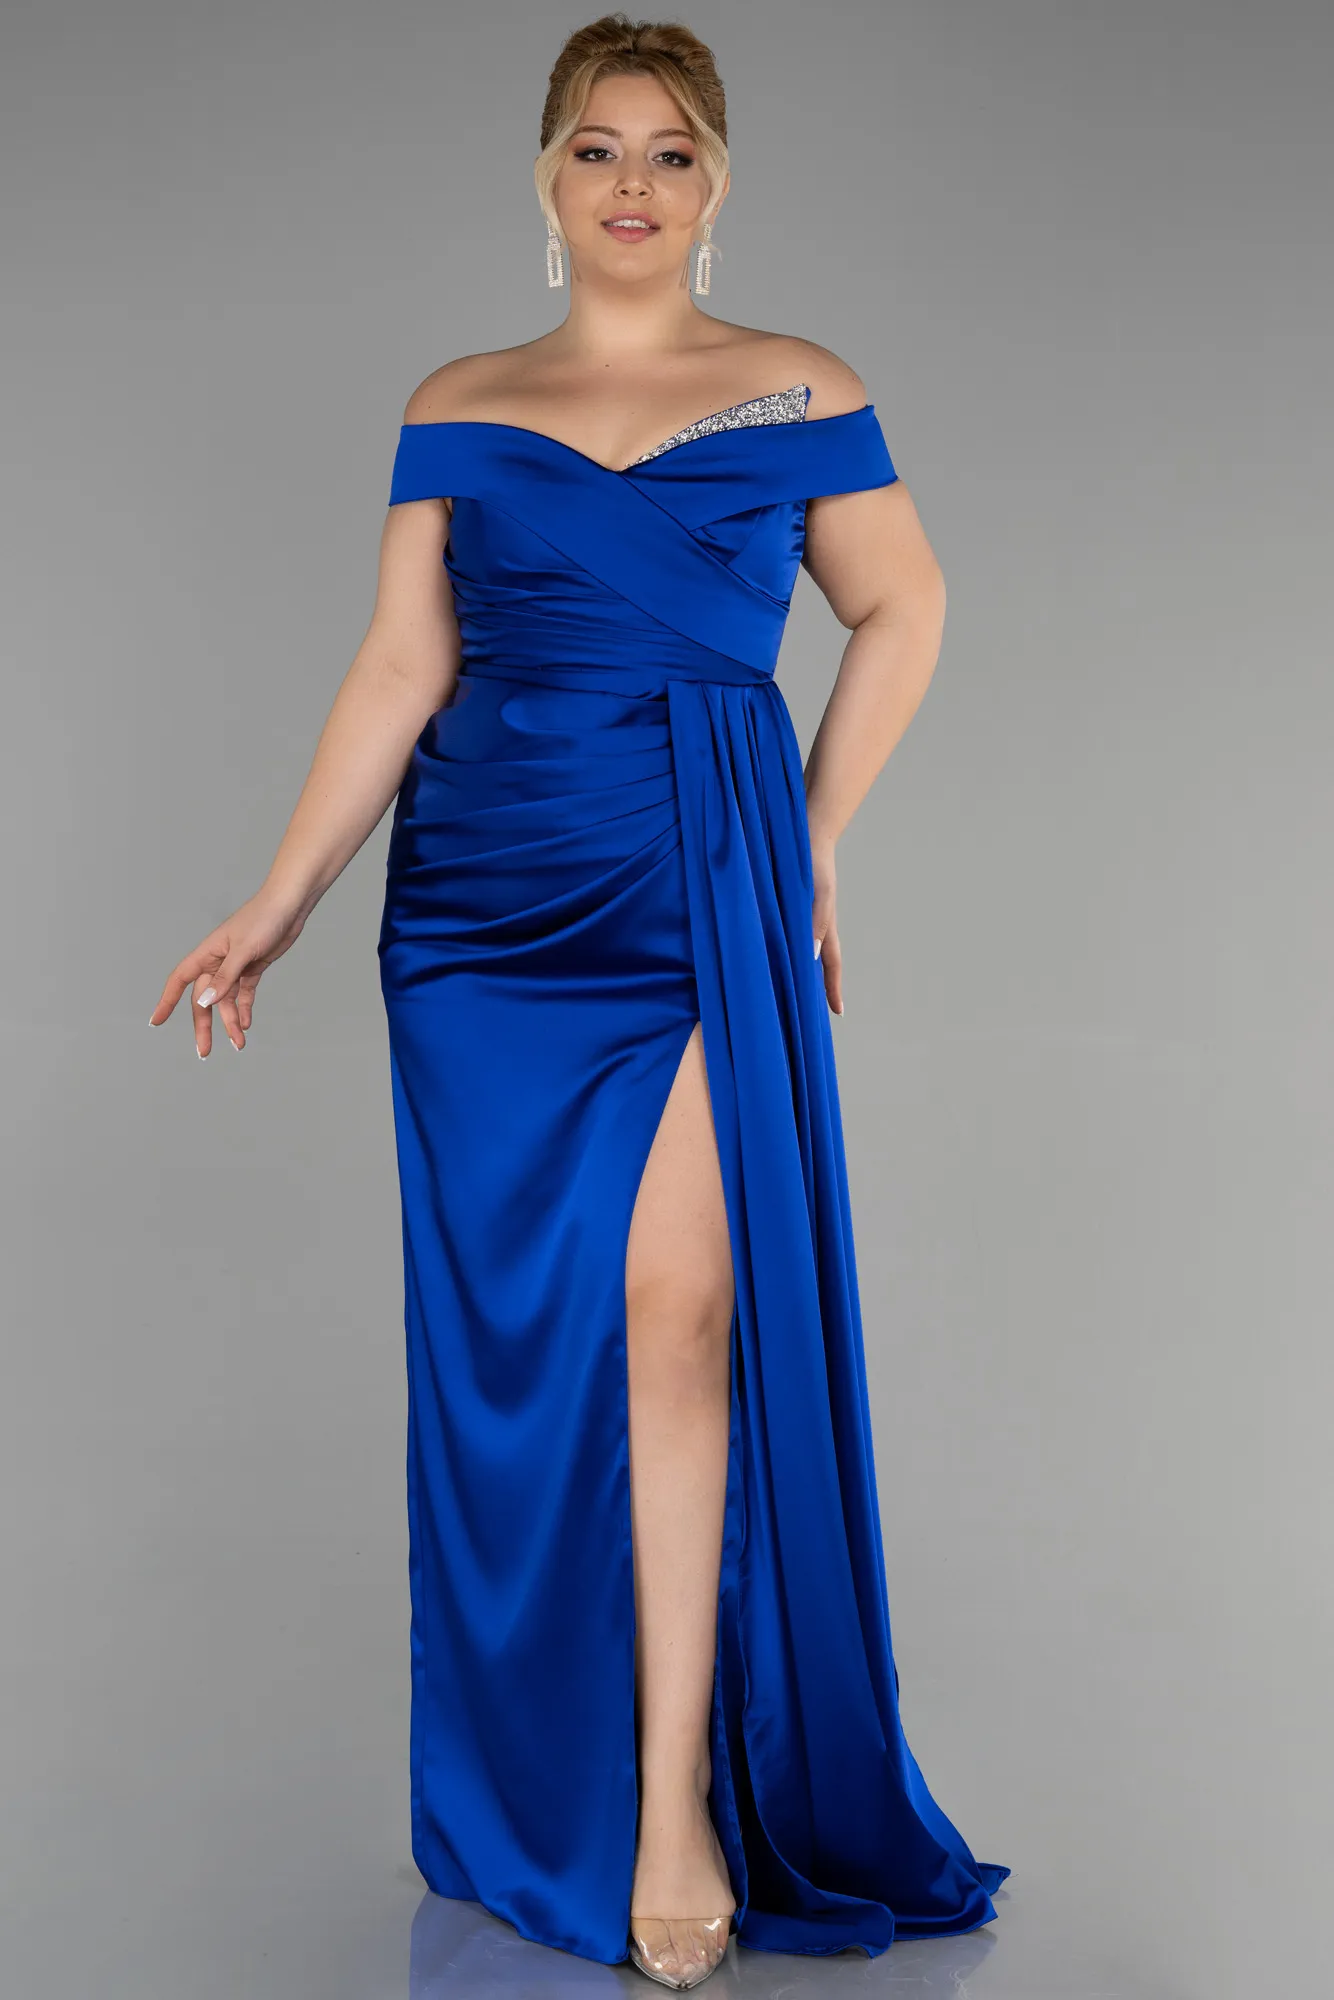 Sax Blue-Long Satin Plus Size Evening Dress ABU2561